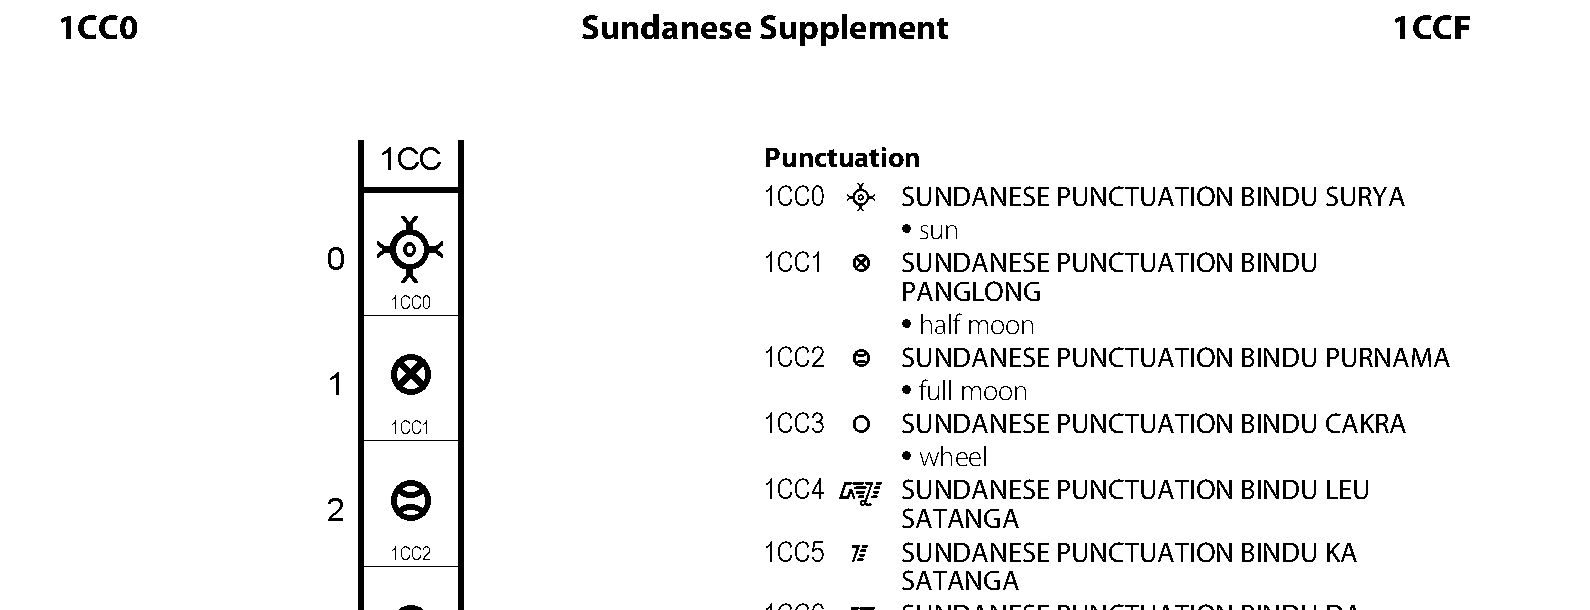 Unicode - Sundanese Supplement